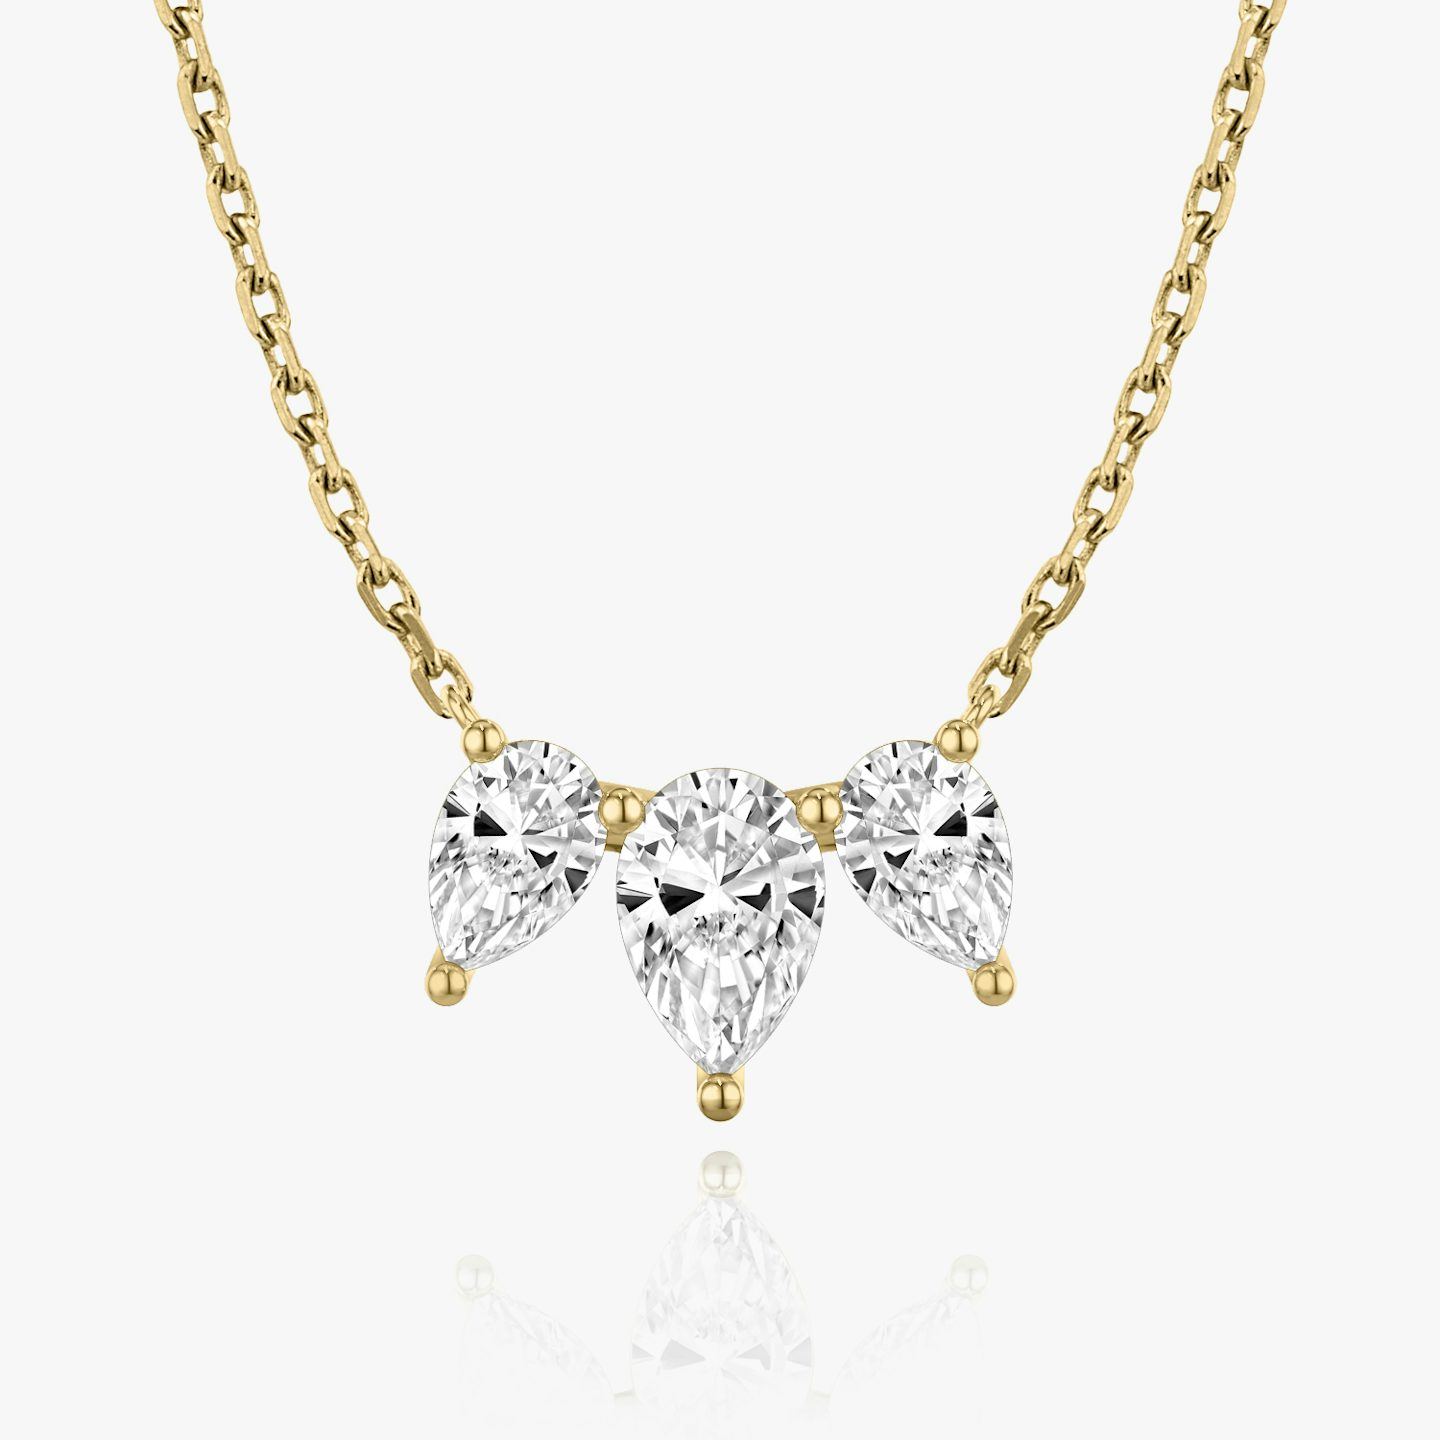 Arc Necklace | Pear | 14k | Yellow Gold | diamondCount: 3 | diamondSize: large | chainLength: 16-18